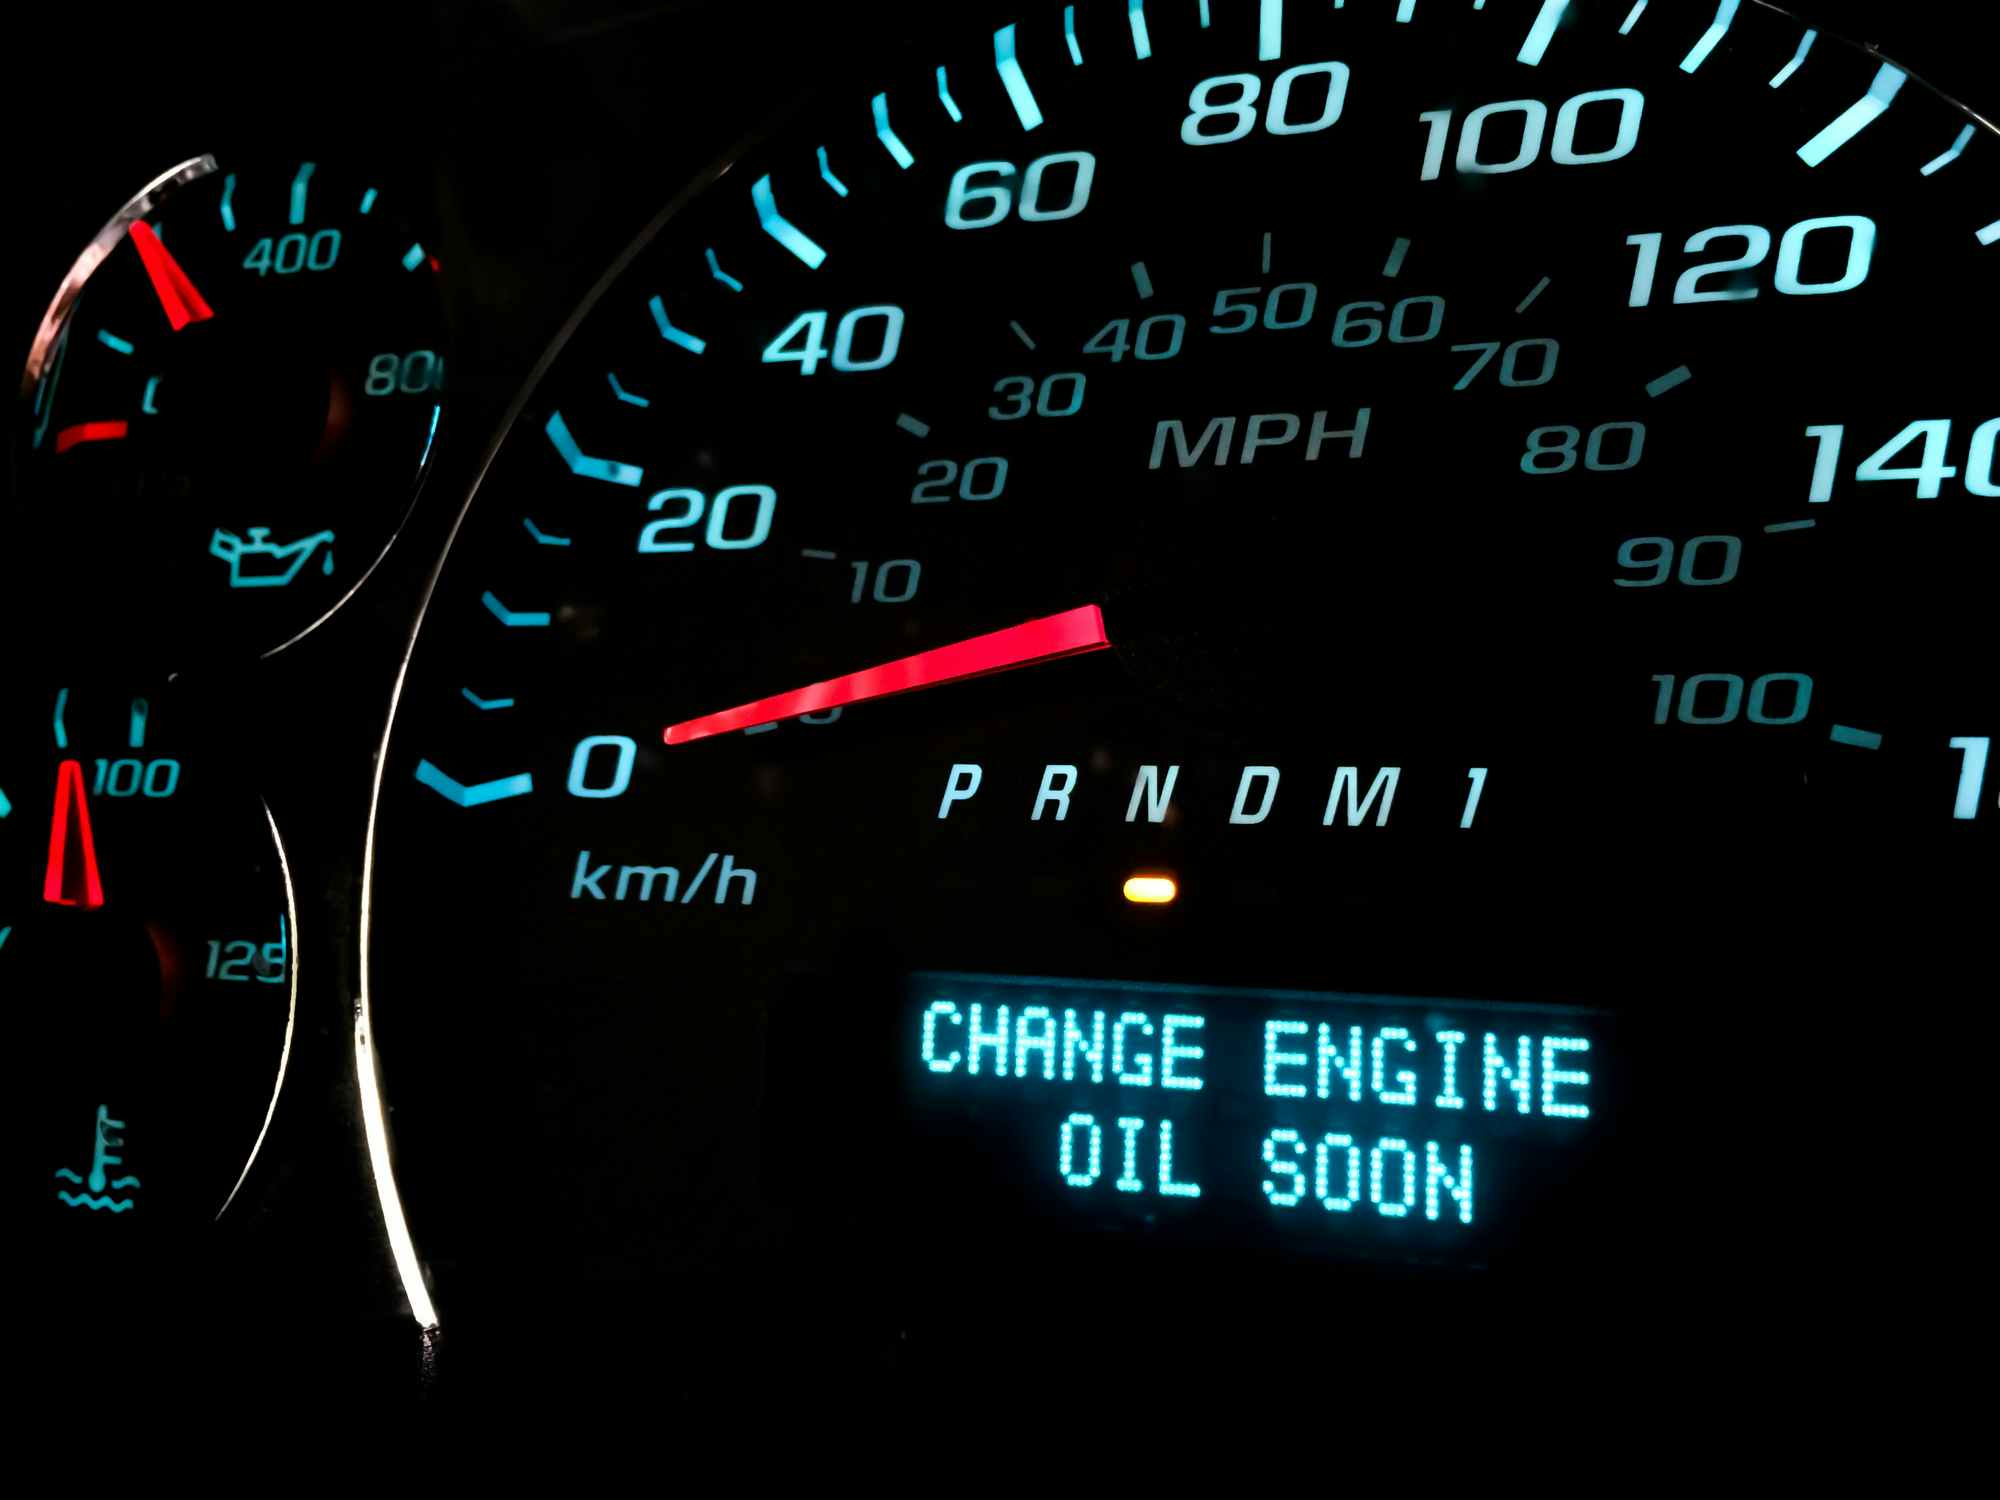 Change engine oil soon warning light on dashboard